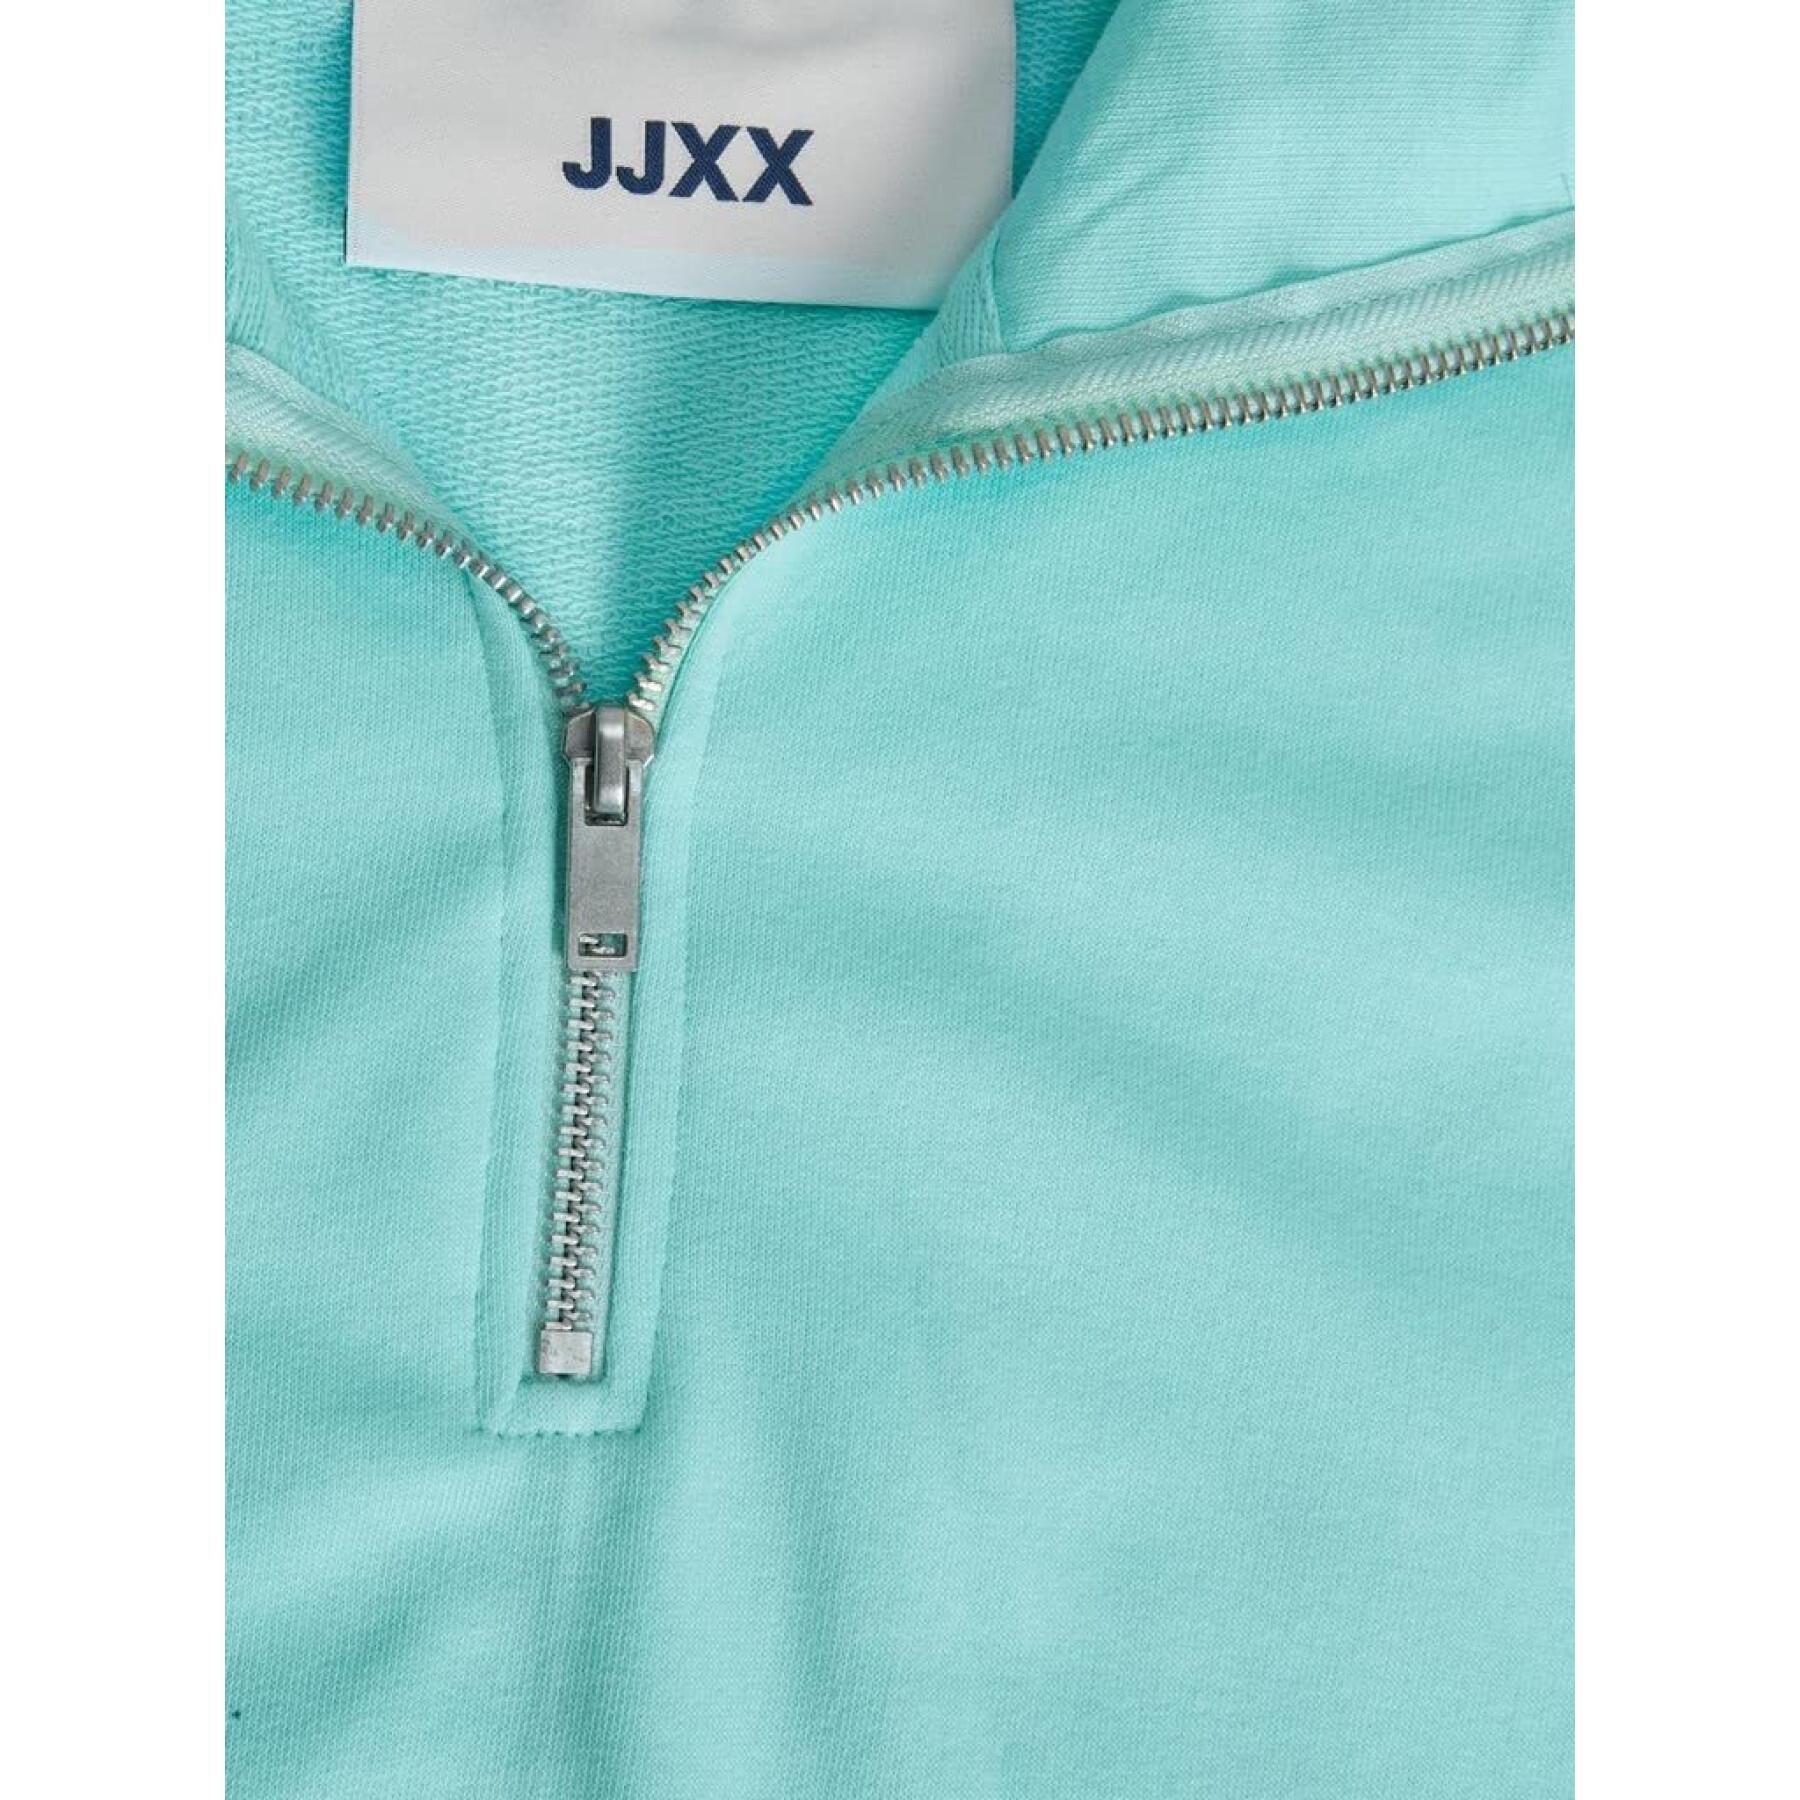 Sweatshirt 1/2 zip femme JJXX Alfa Reg Every